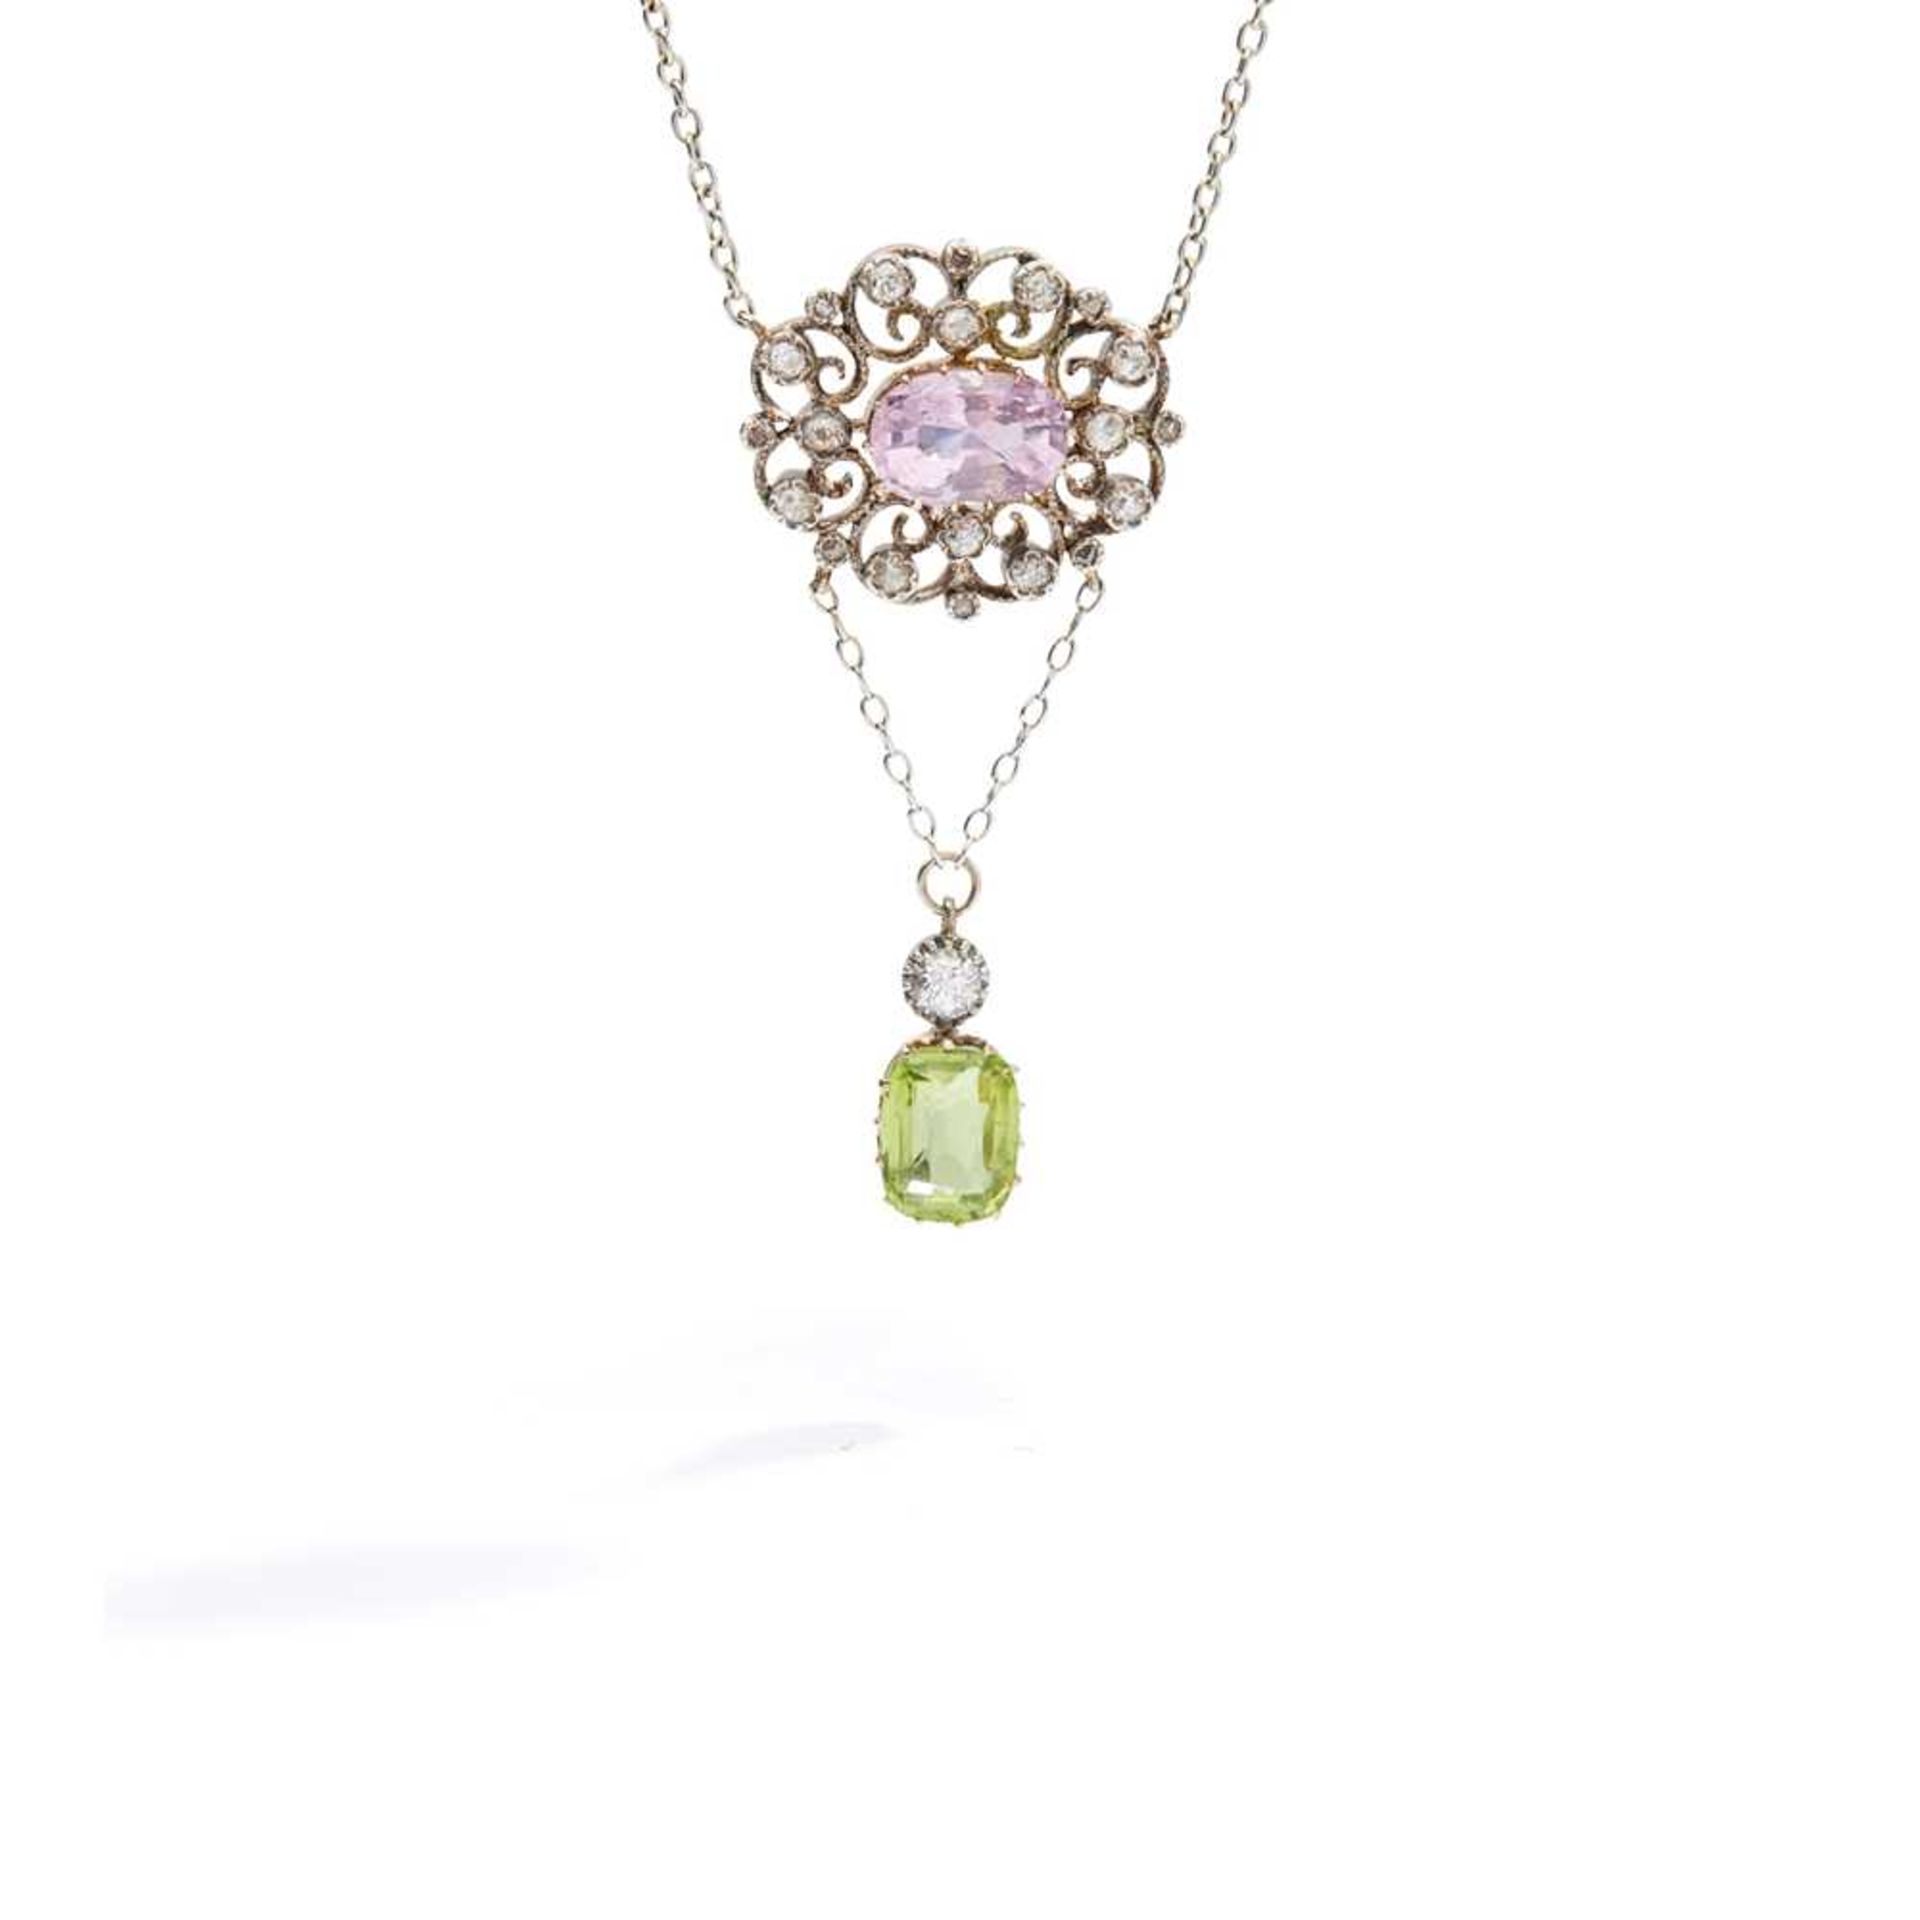 An early 20th century pink sapphire, diamond and peridot pendant, circa 1910